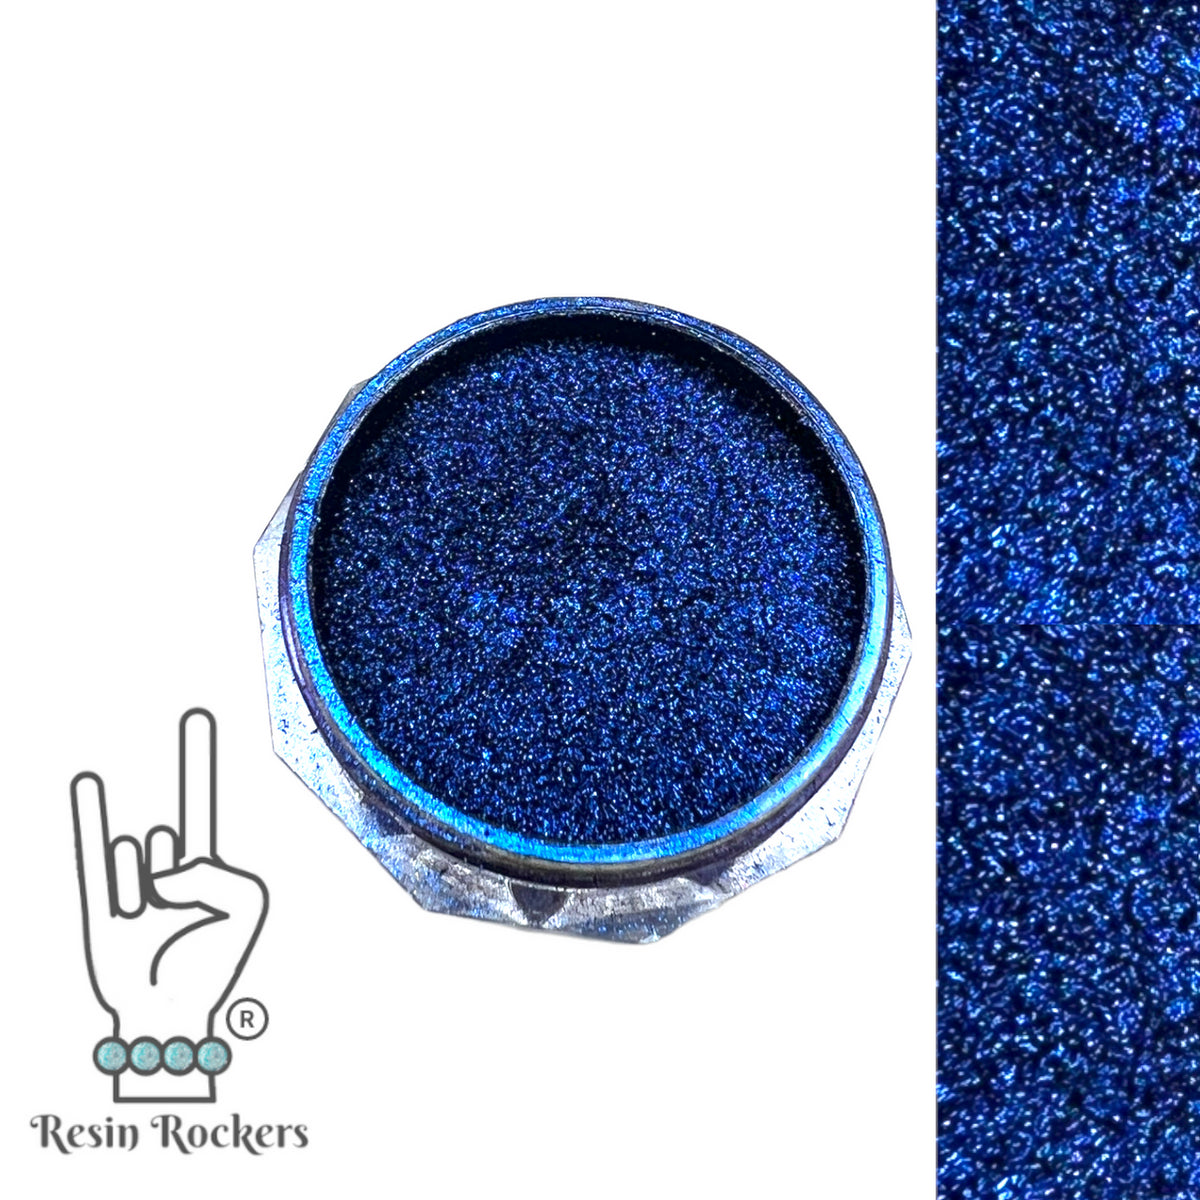 Resin Rockers Premium Color-shift Multi-chromatic Chameleon Pigment Powder Mood Indigo